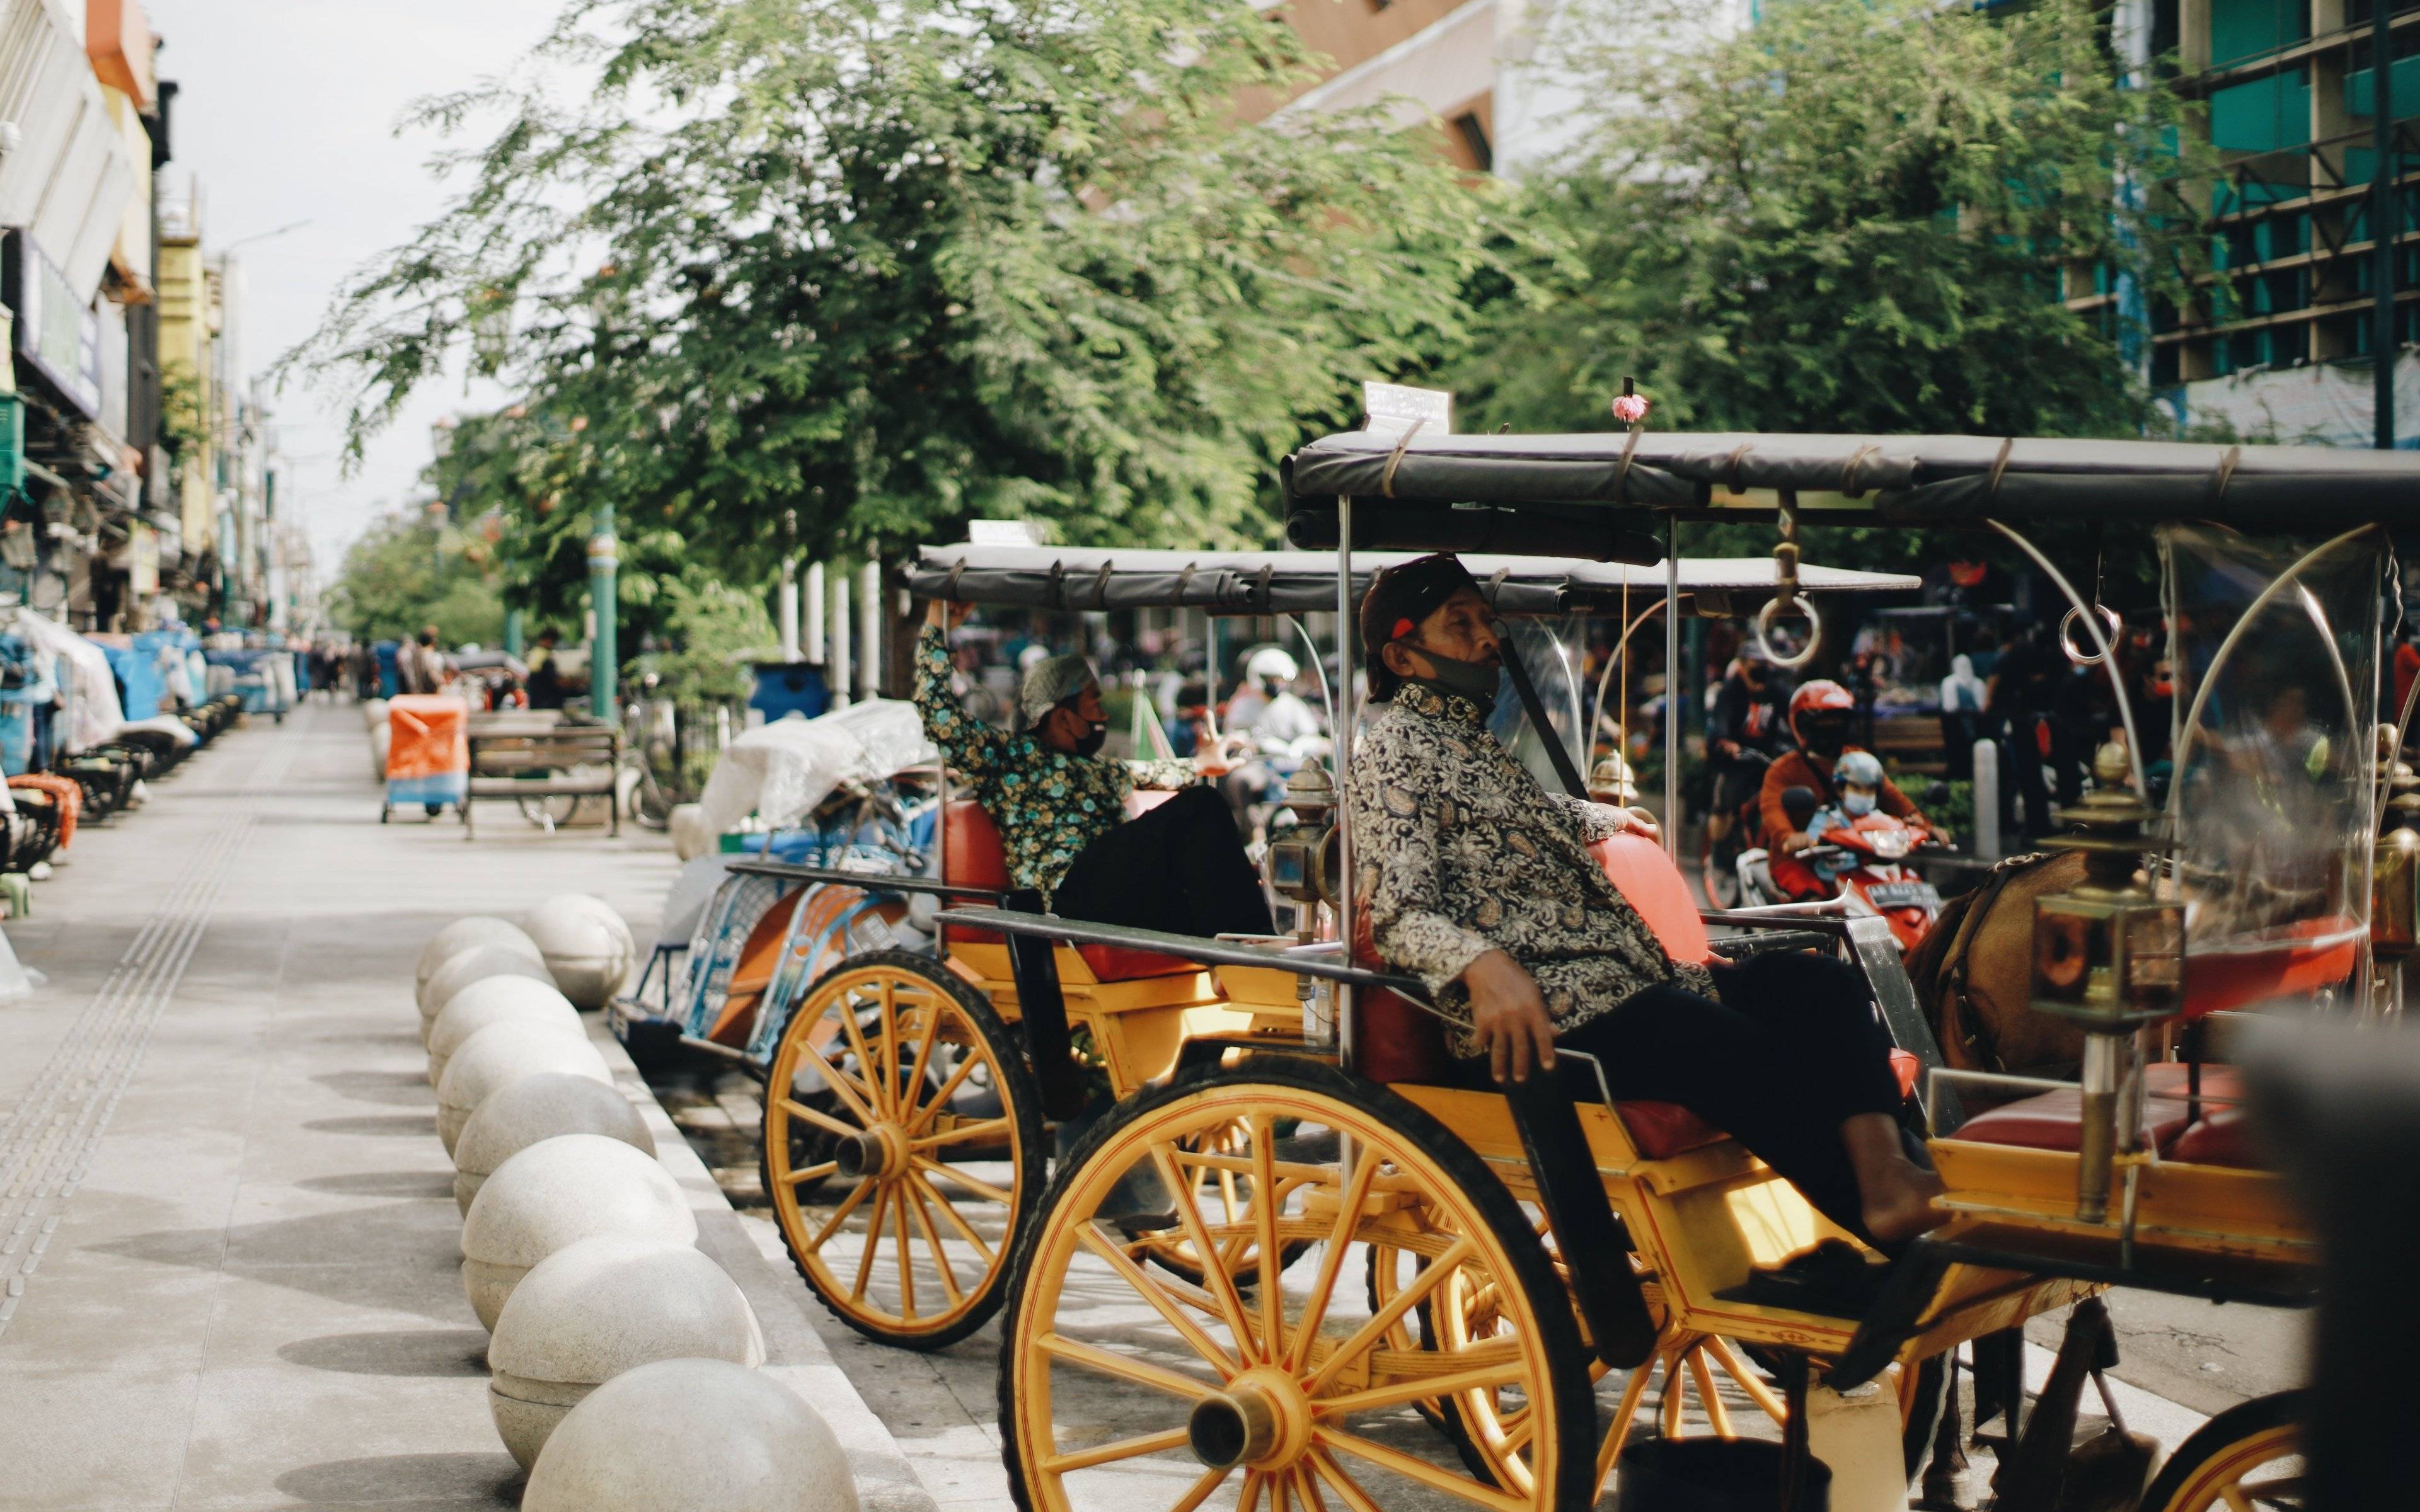 Wilkommen in Yogyakarta